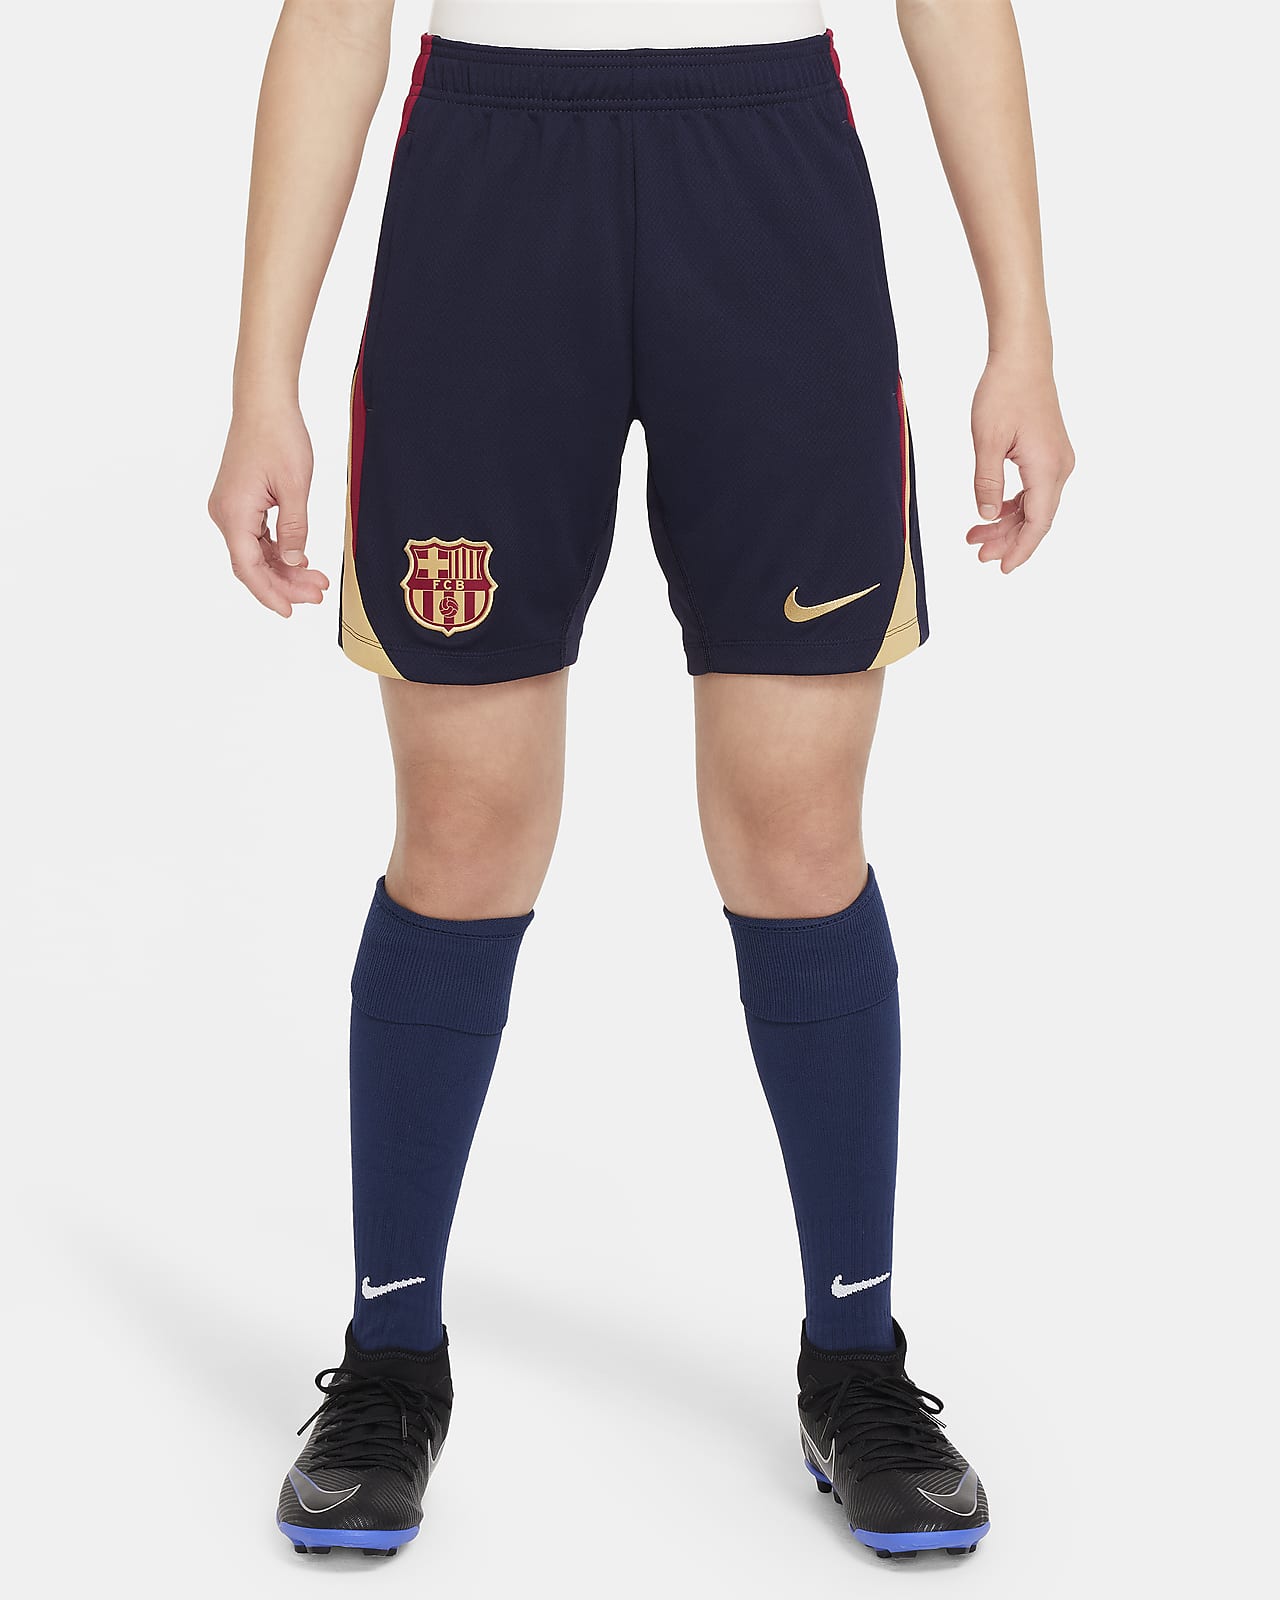 FC Barcelona Strike Pantalons curts Nike Dri-FIT de futbol - Nen/a